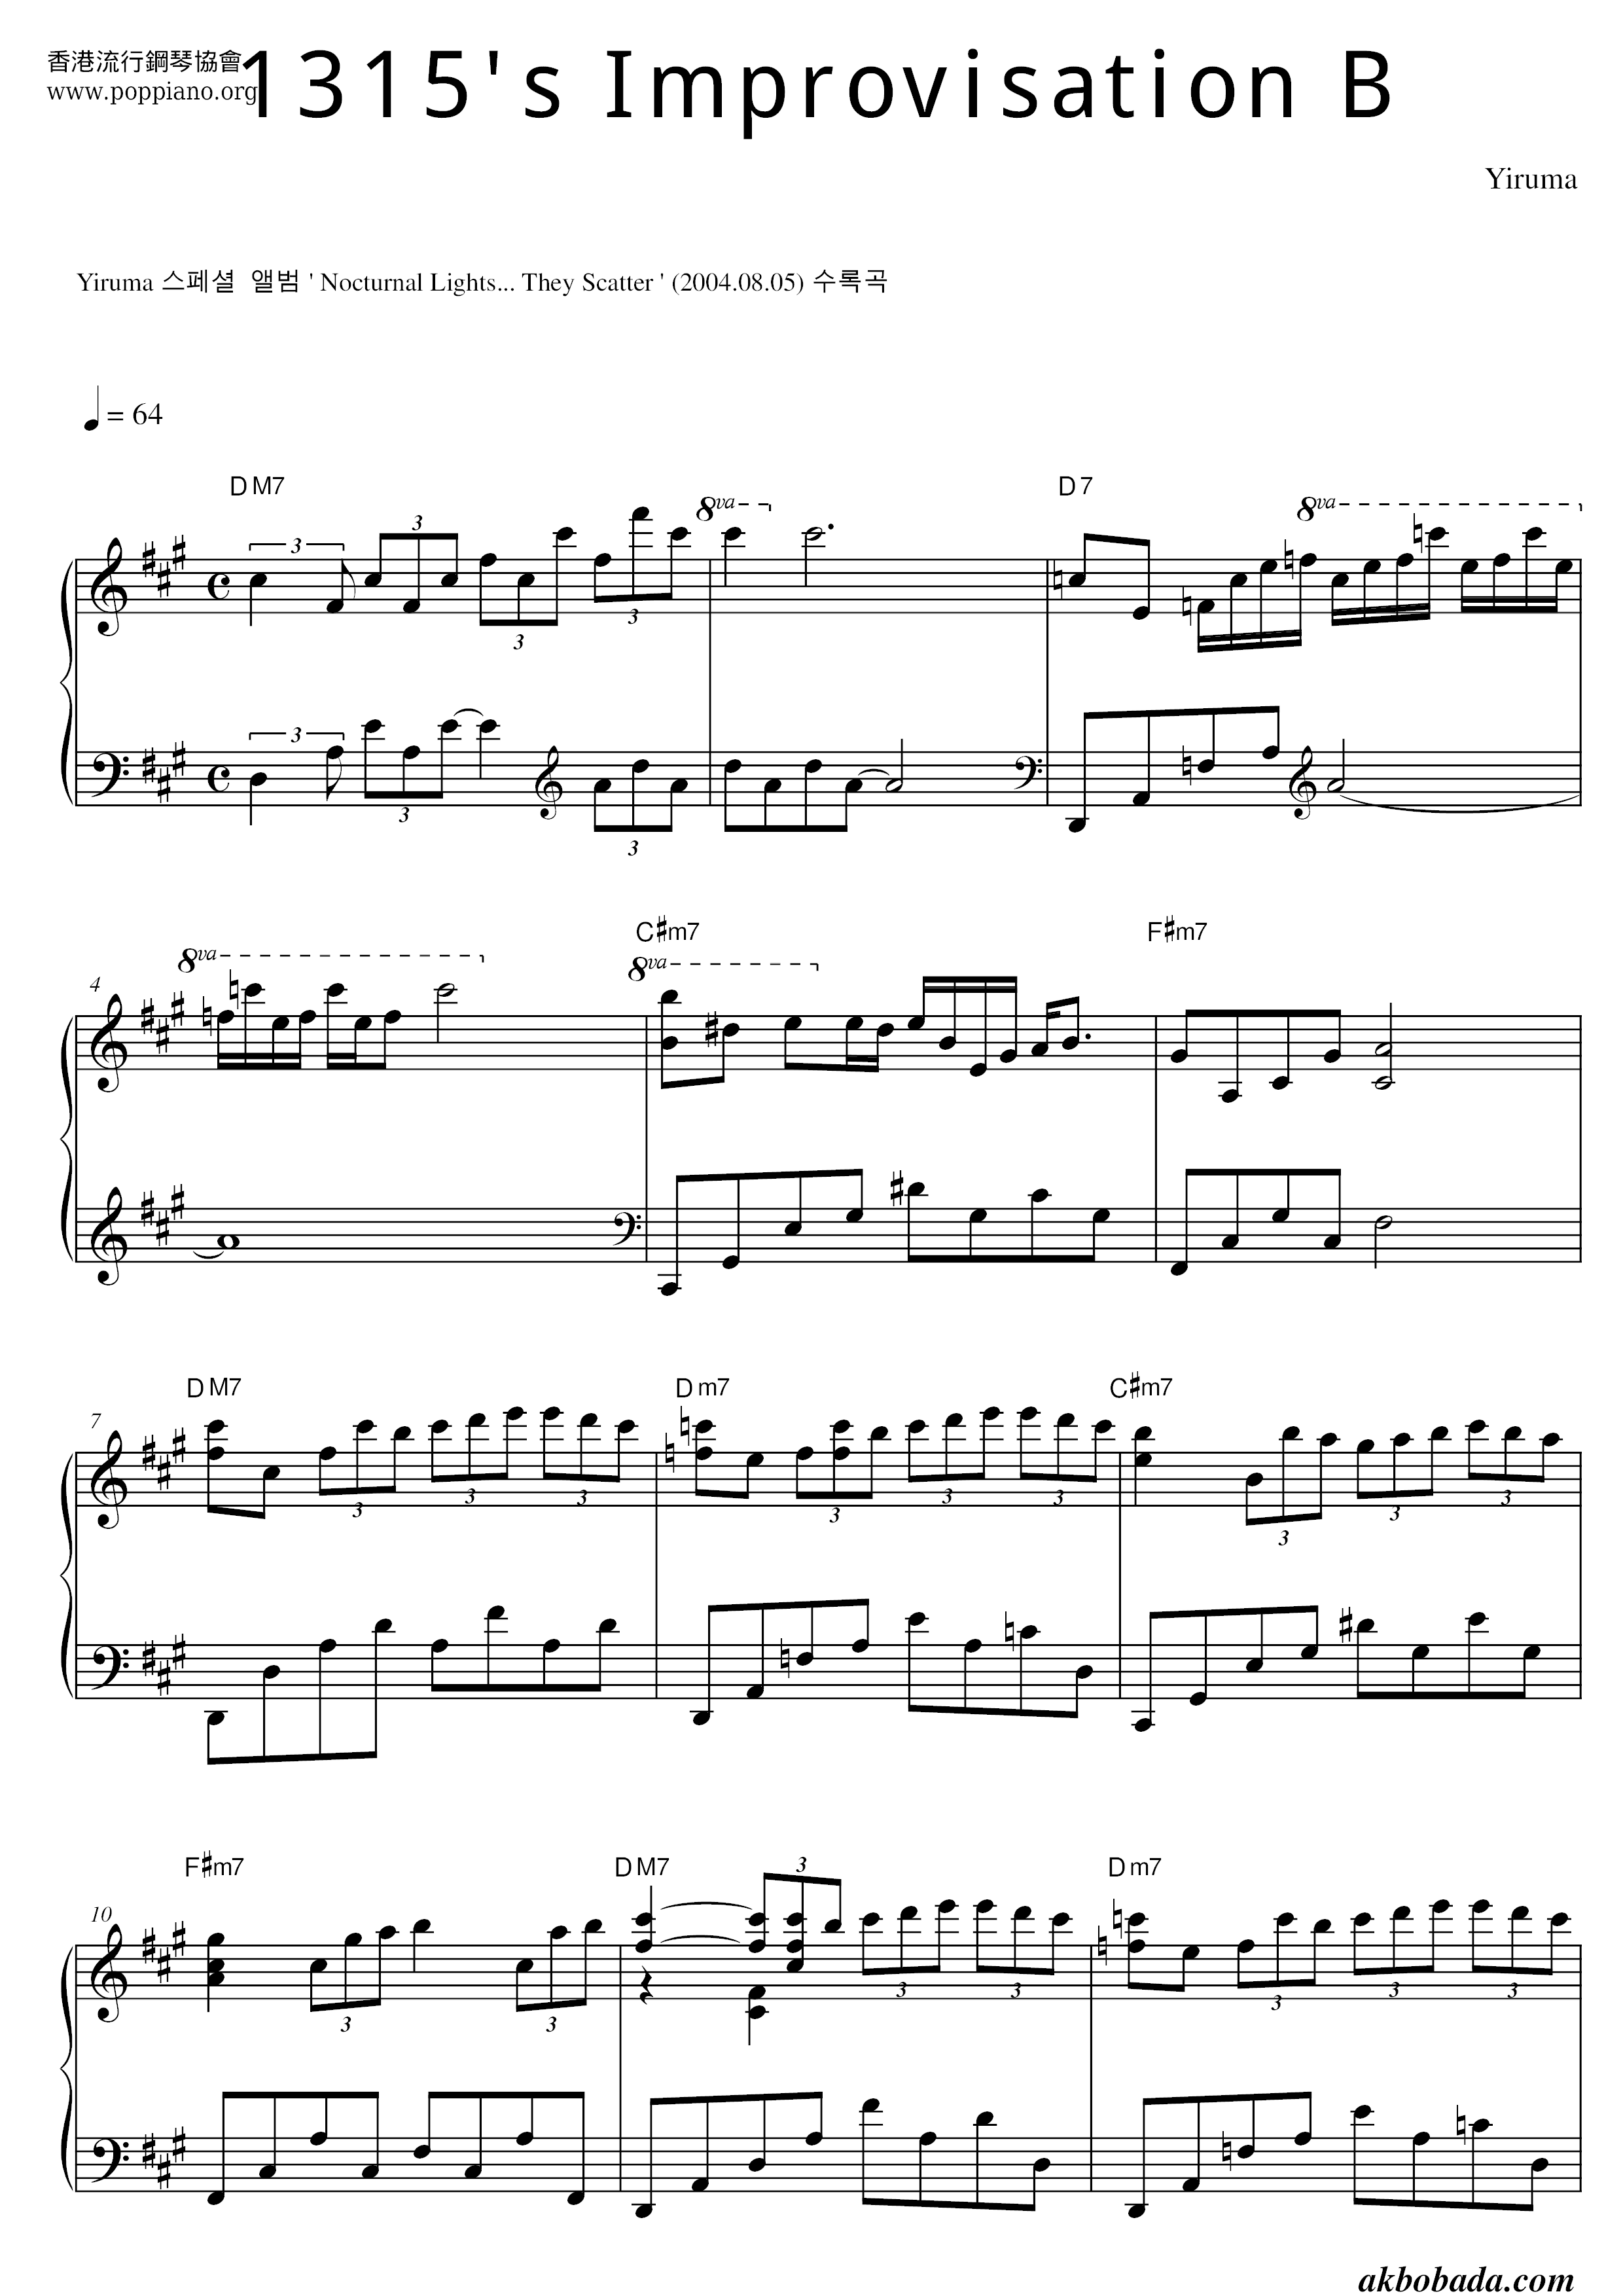 1315's Improvisation Bピアノ譜